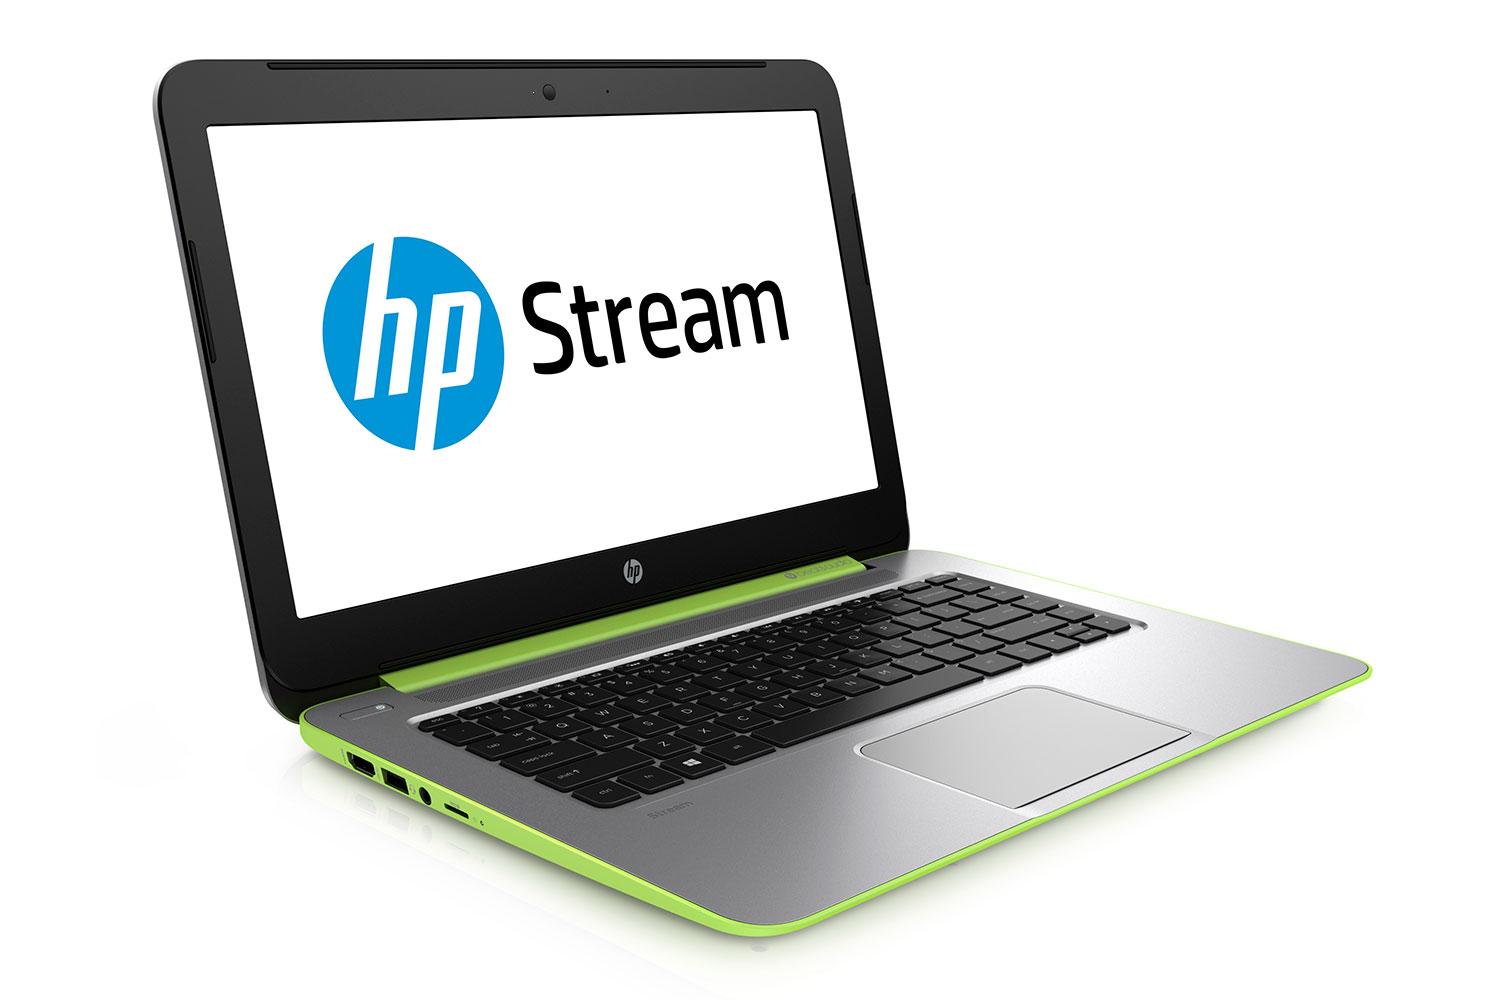 HP Stream green press image